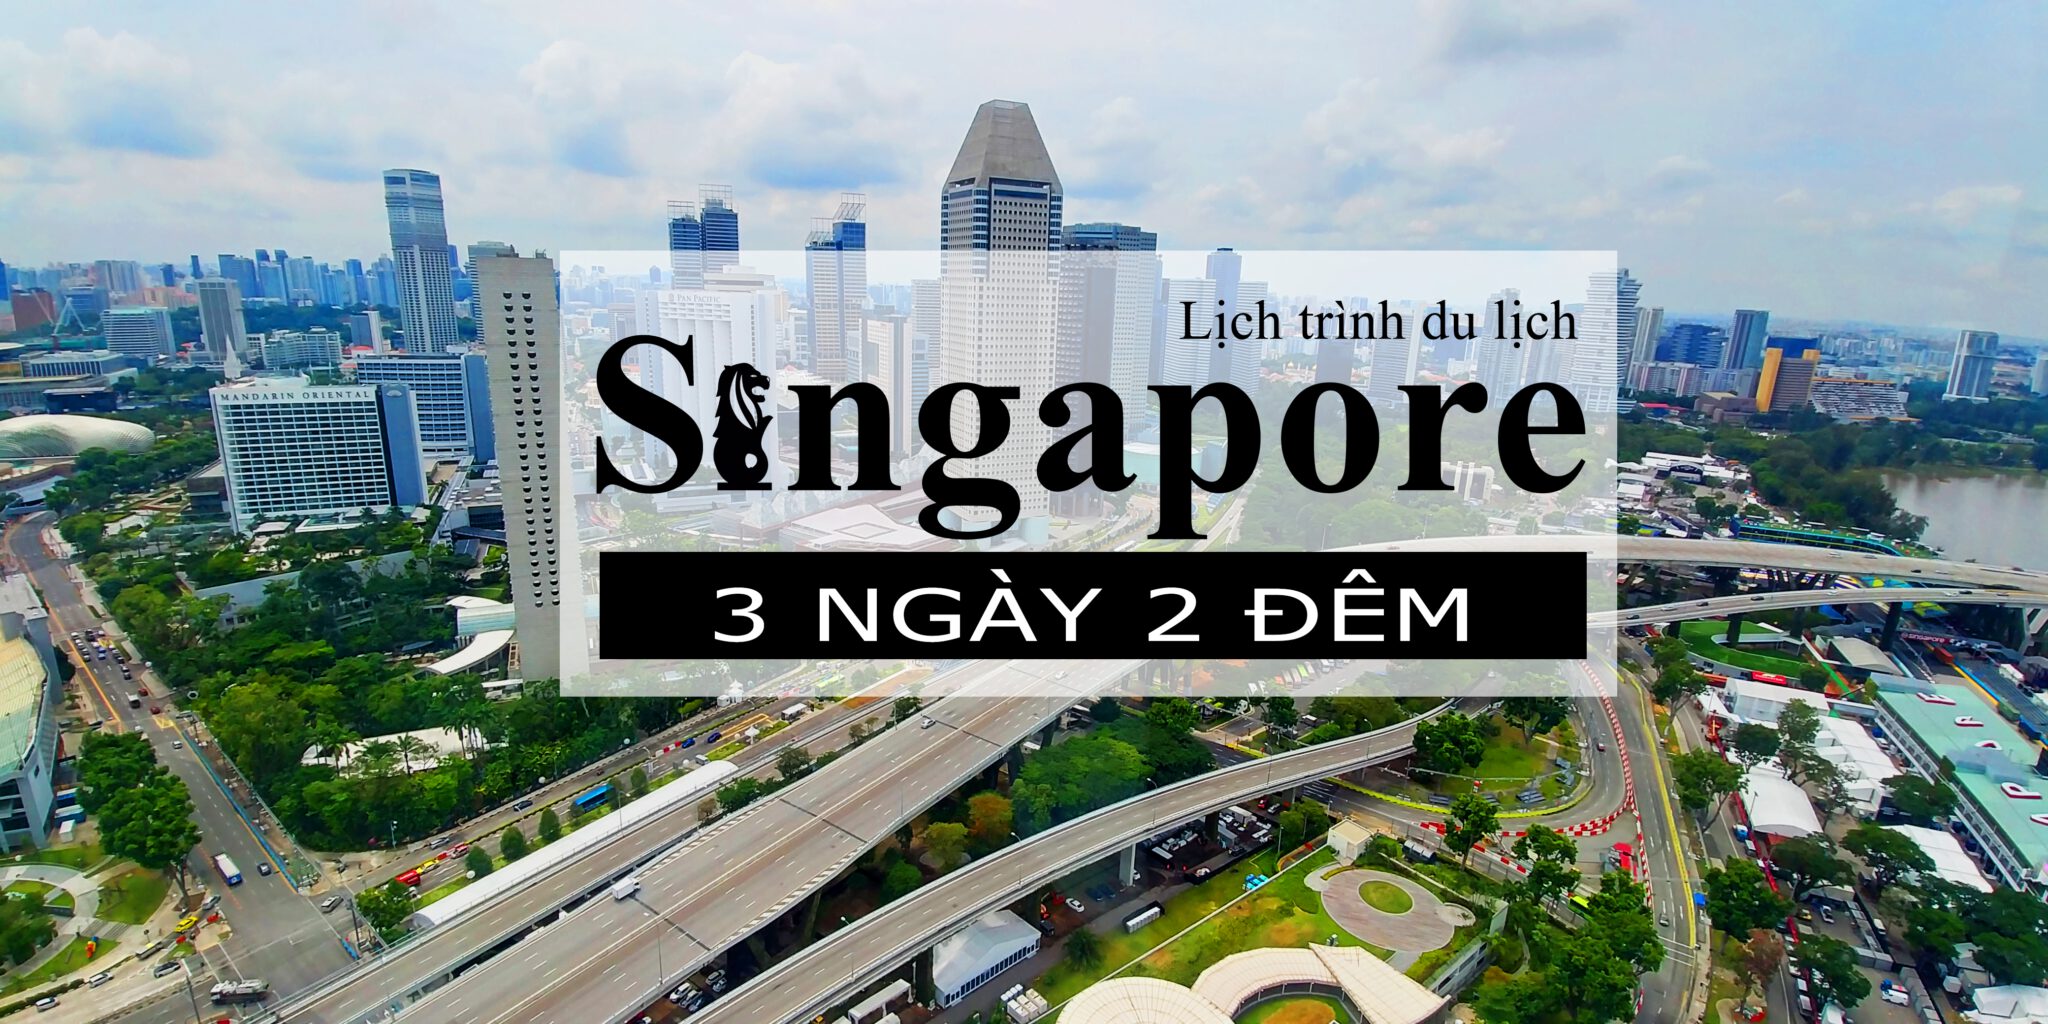 Review du lịch Singapore tự túc